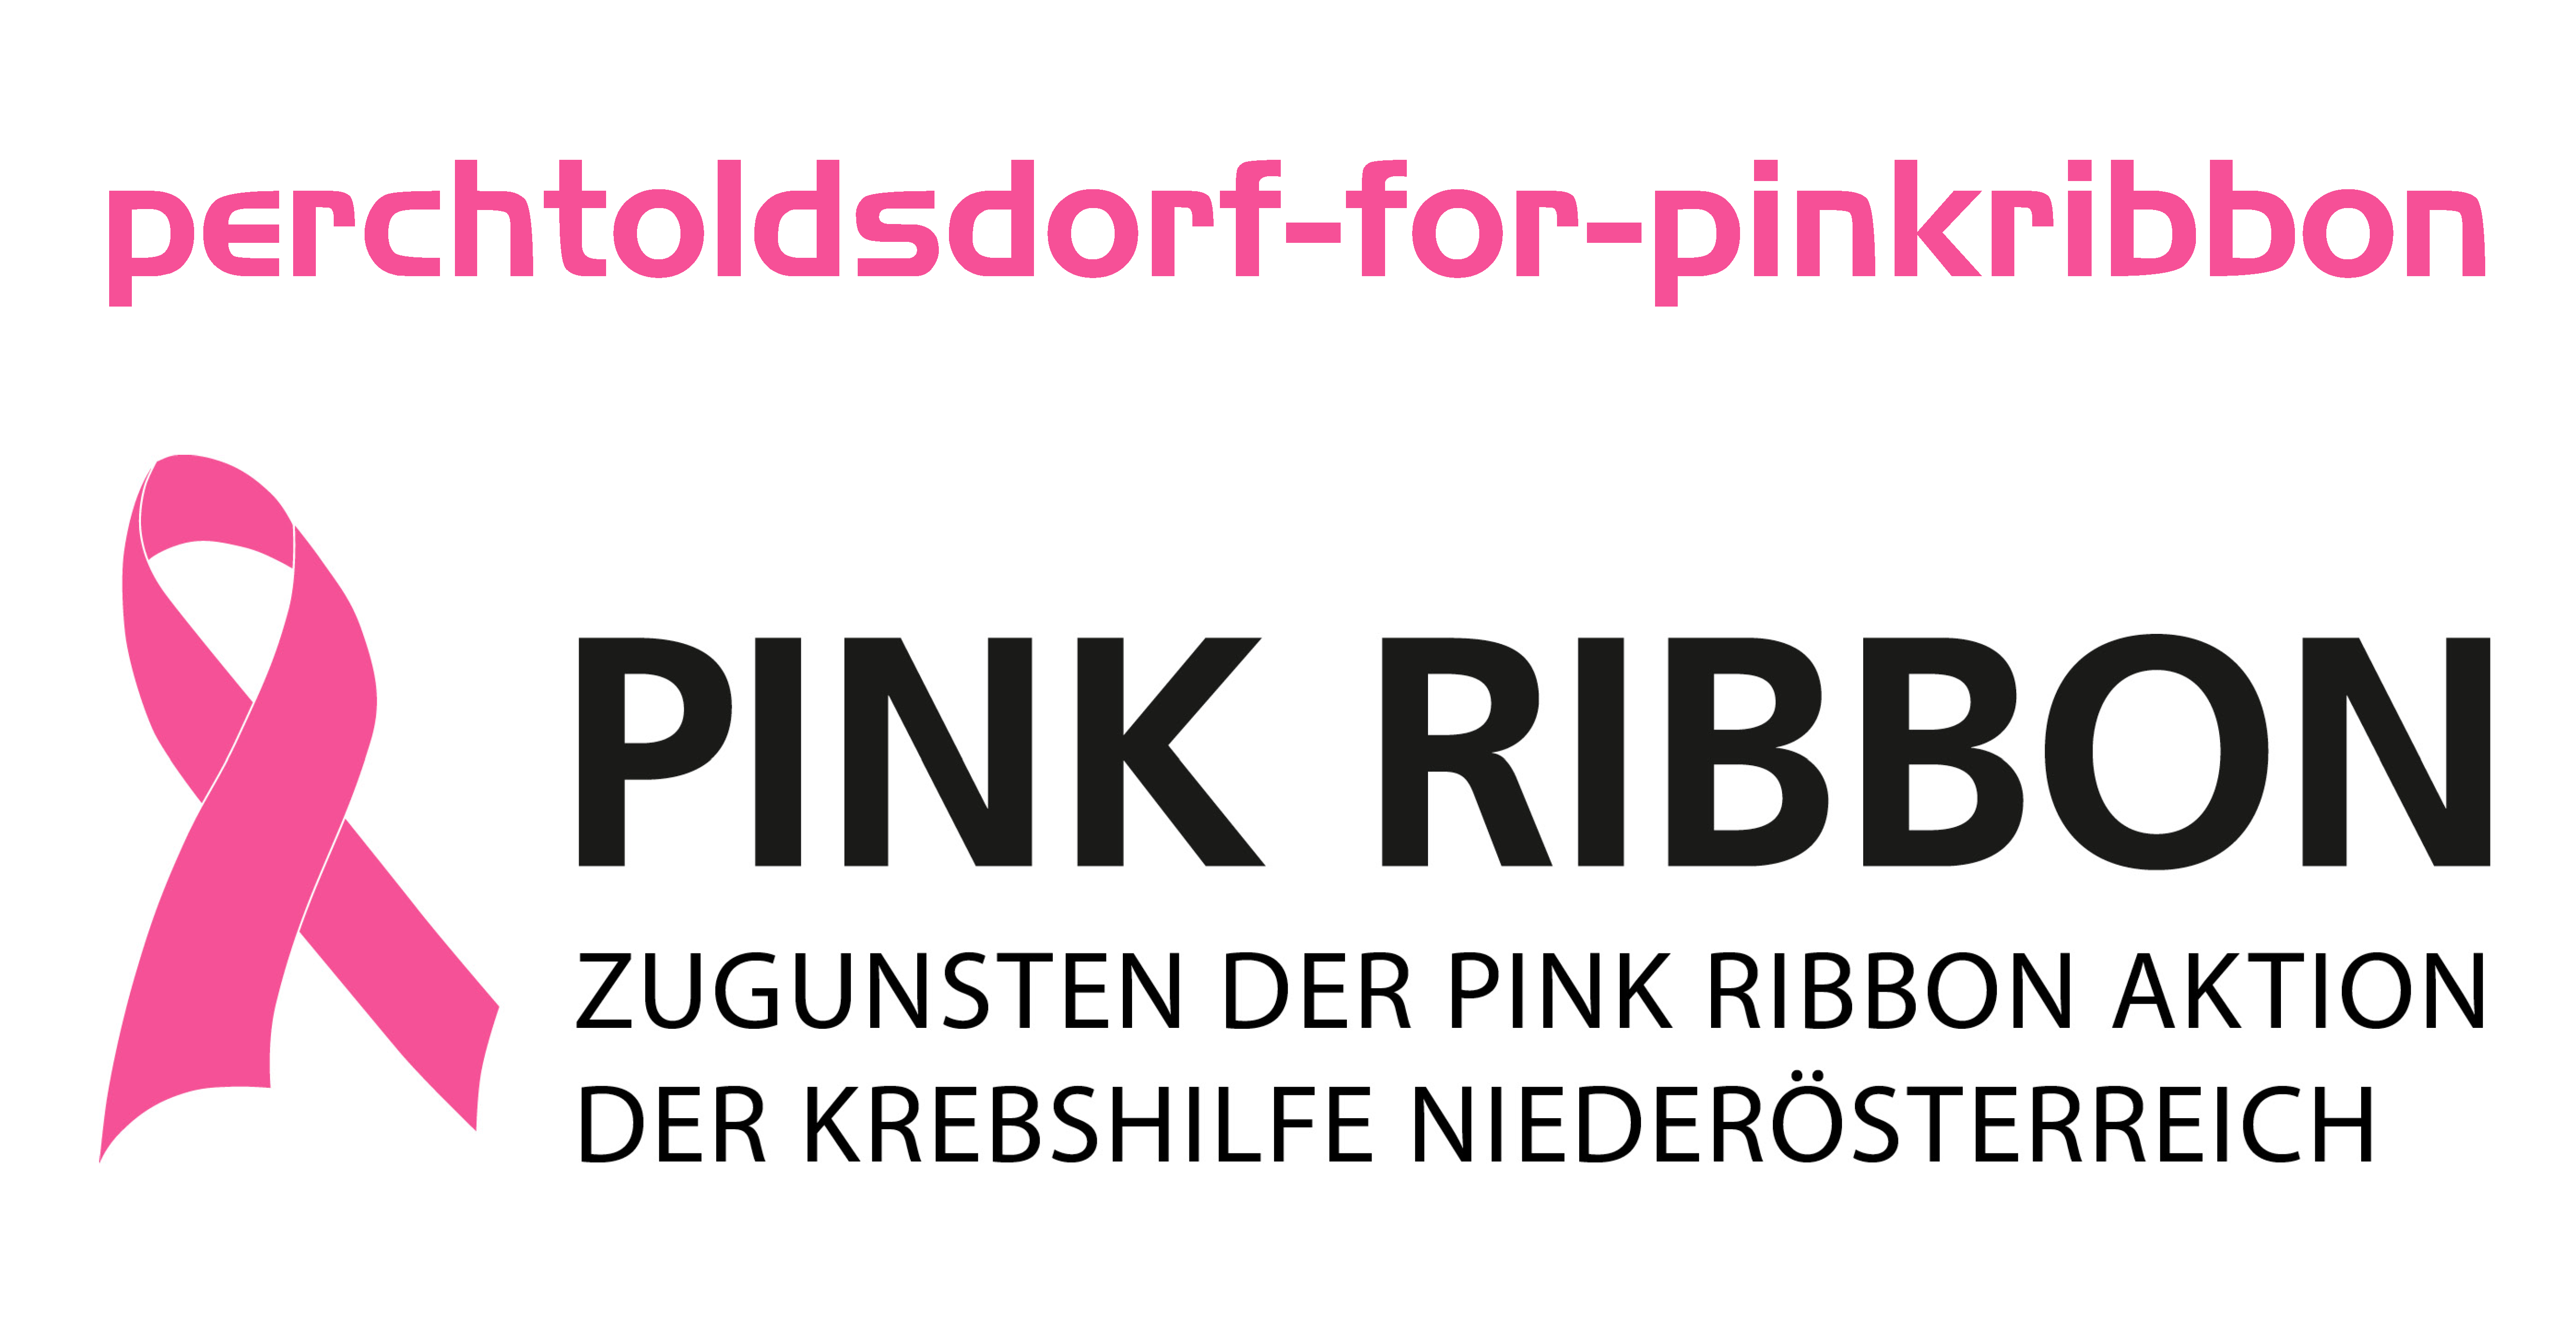 Perchtoldsdorf for Pink Ribbon